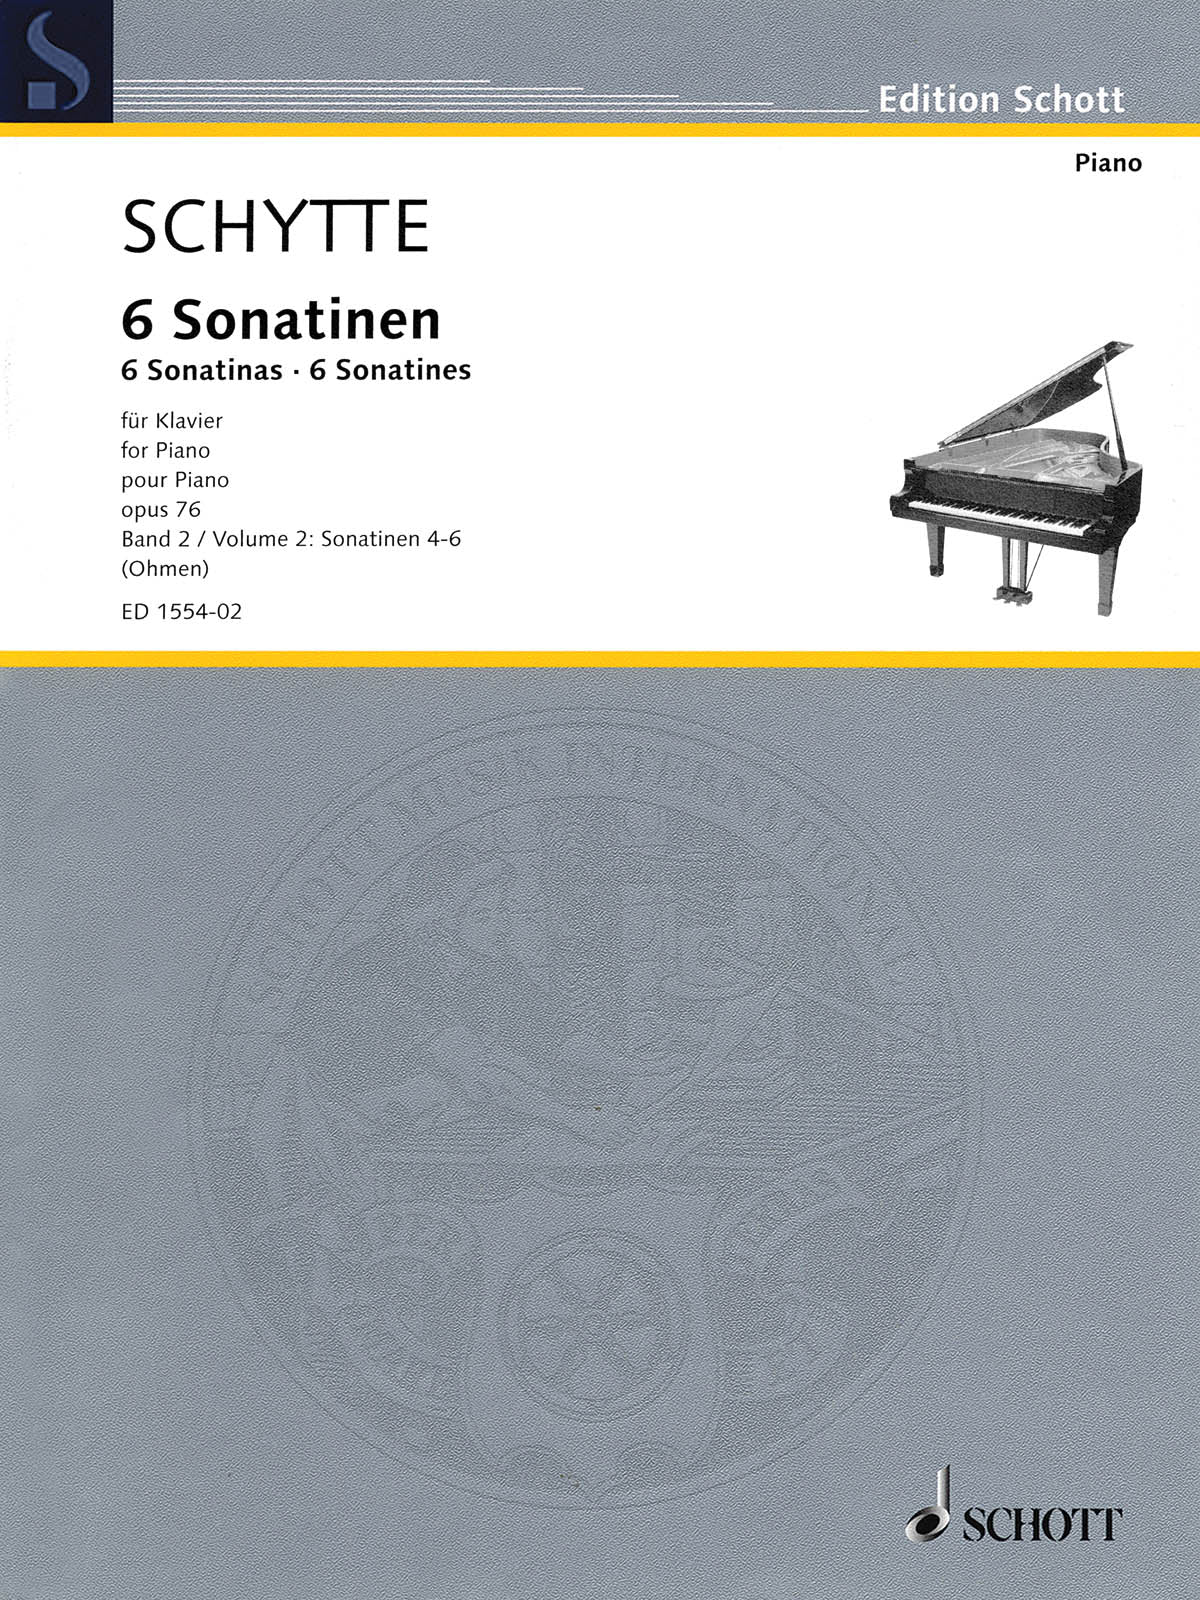 Schytte: 6 Sonatinas, Op. 76 - Volume 2 (Nos. 4-6)